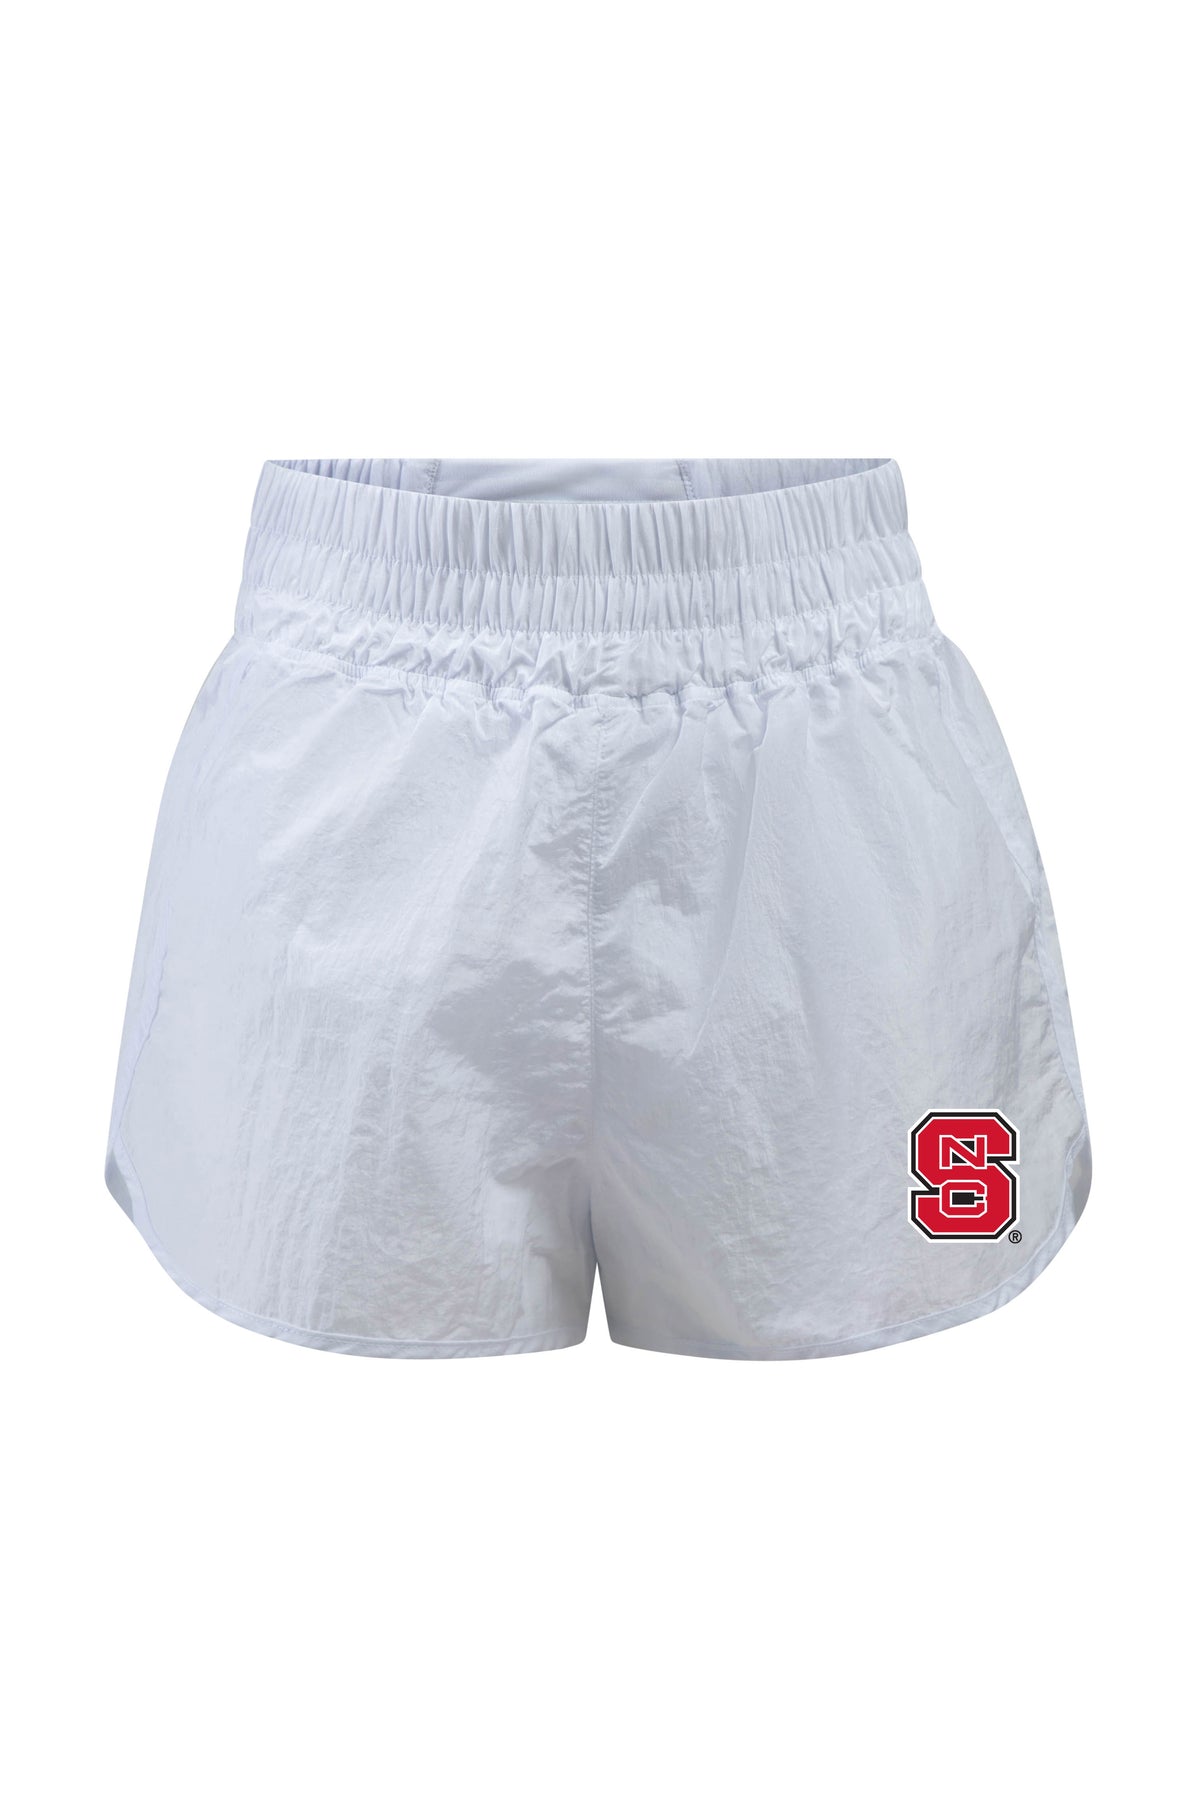 North Carolina State University Boxer Short